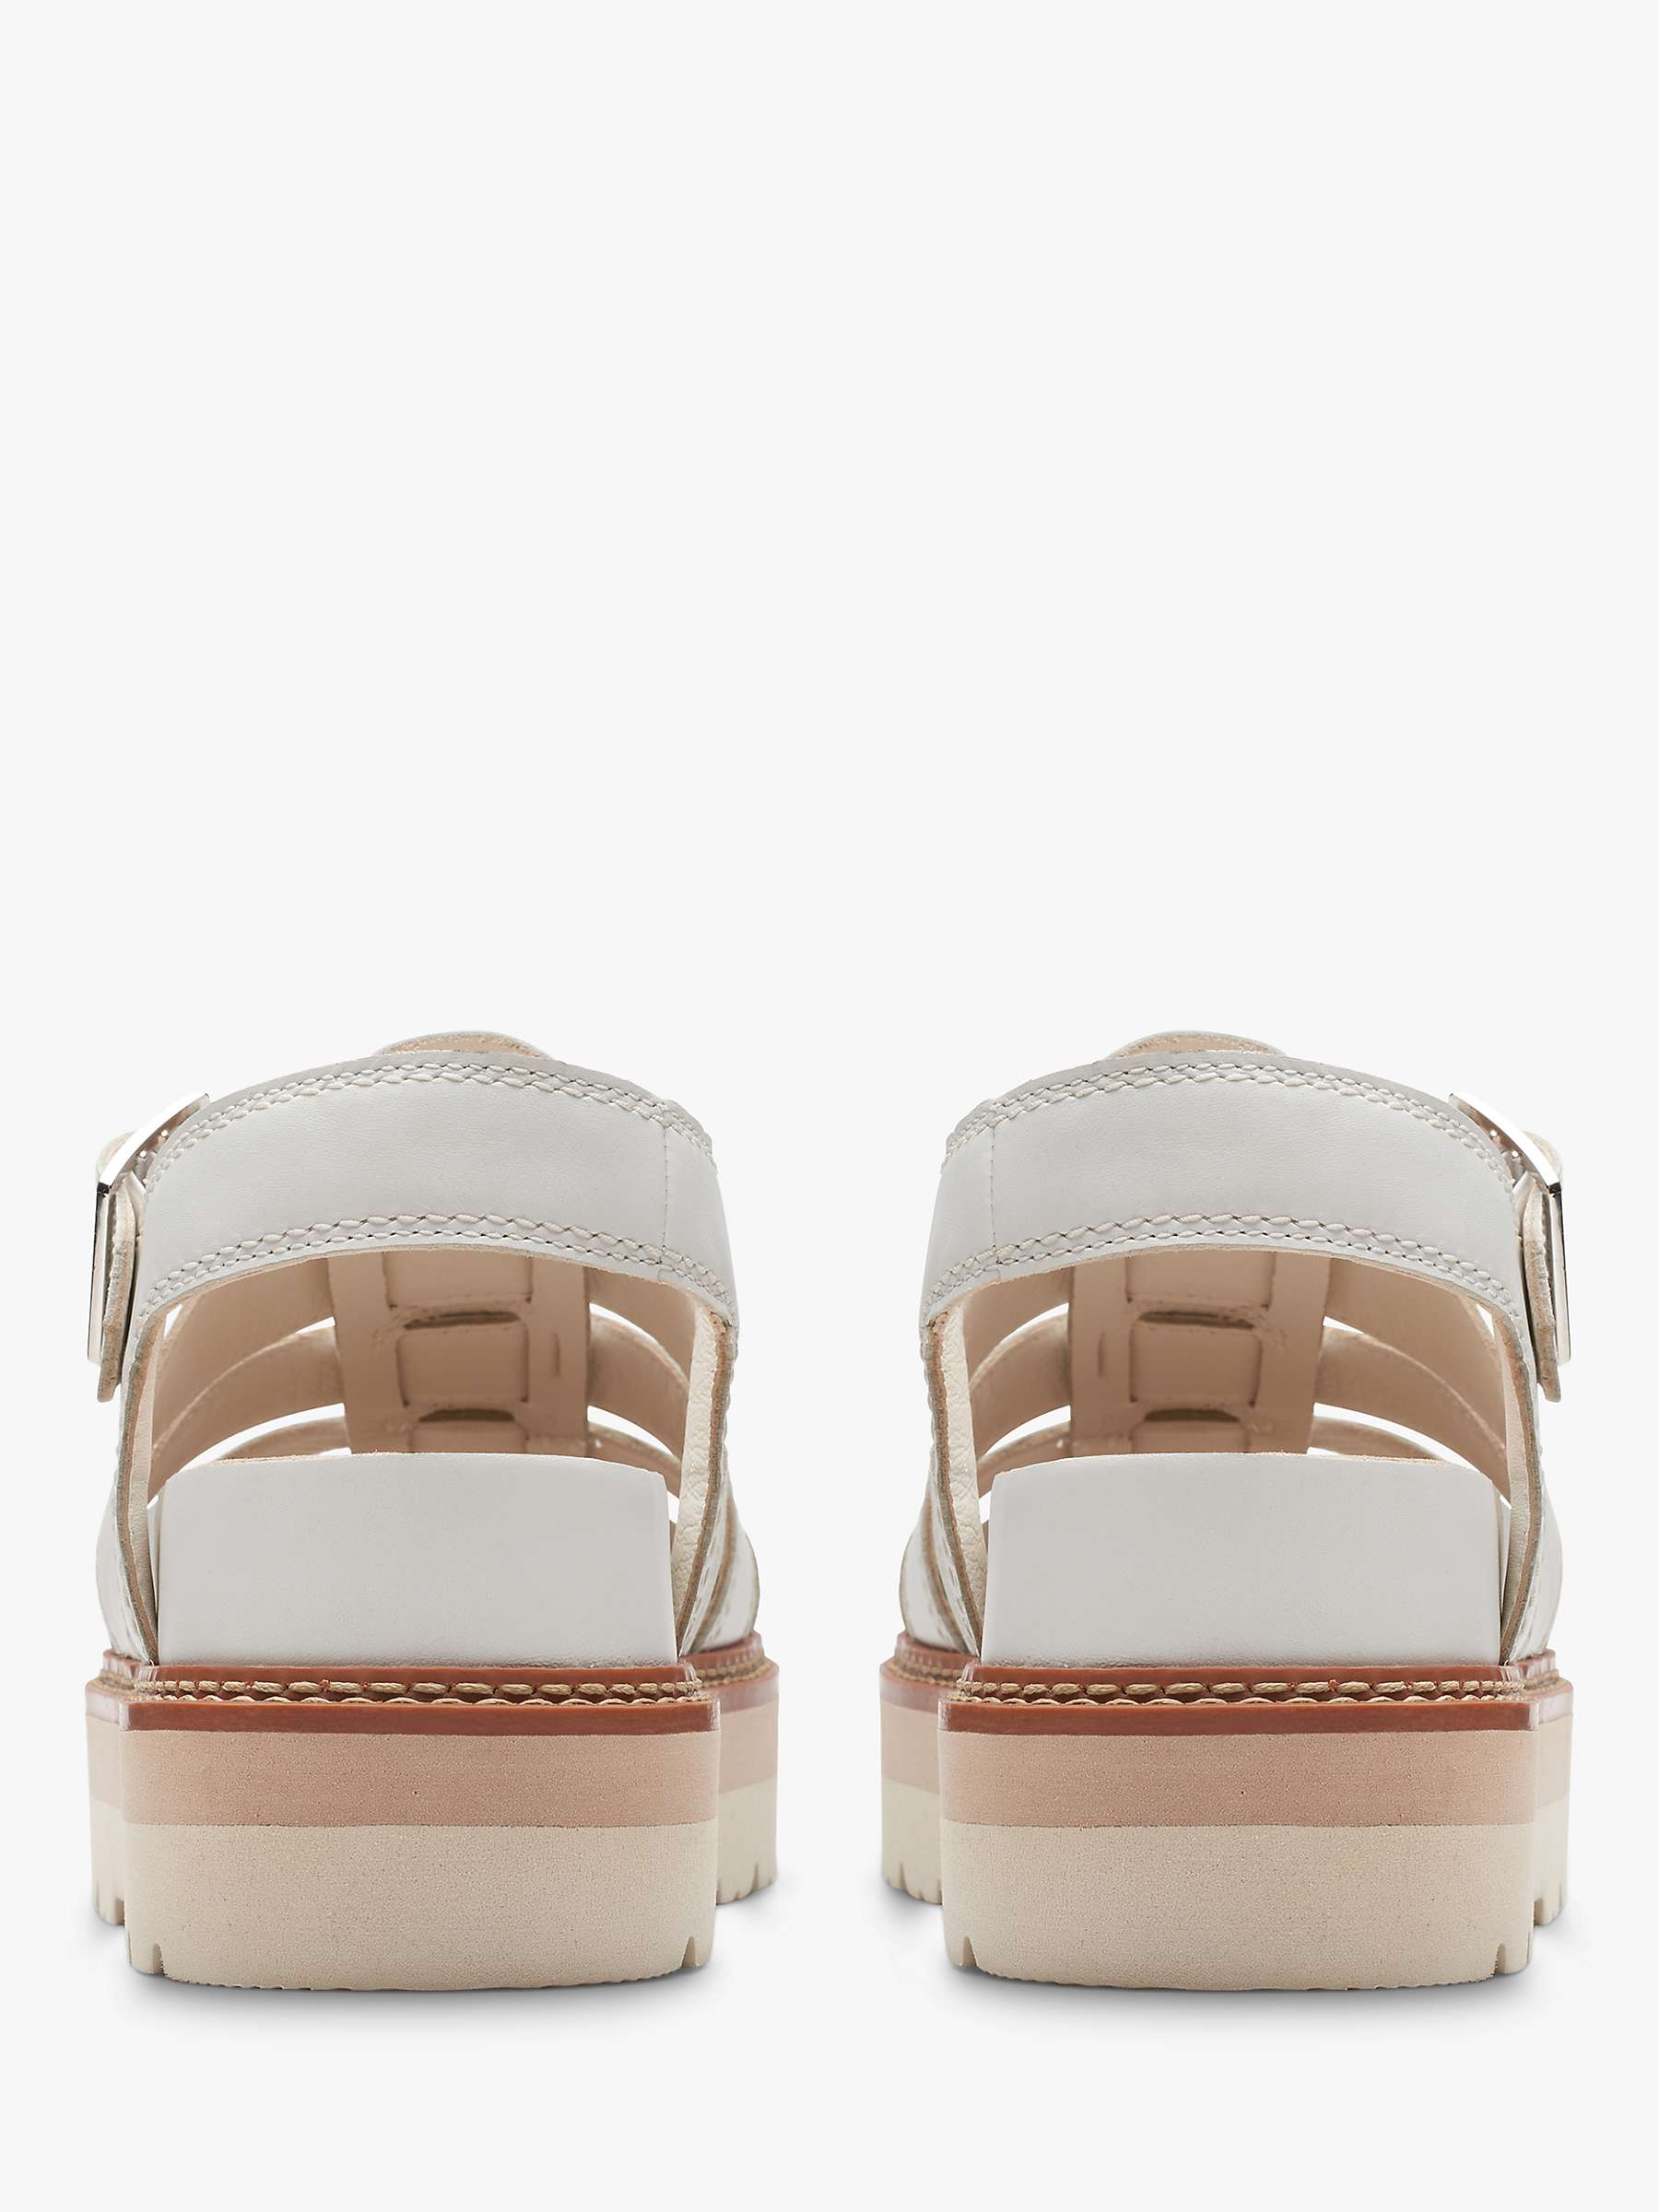 Buy Clarks Orianna Twist Leather Caged Sandals Online at johnlewis.com